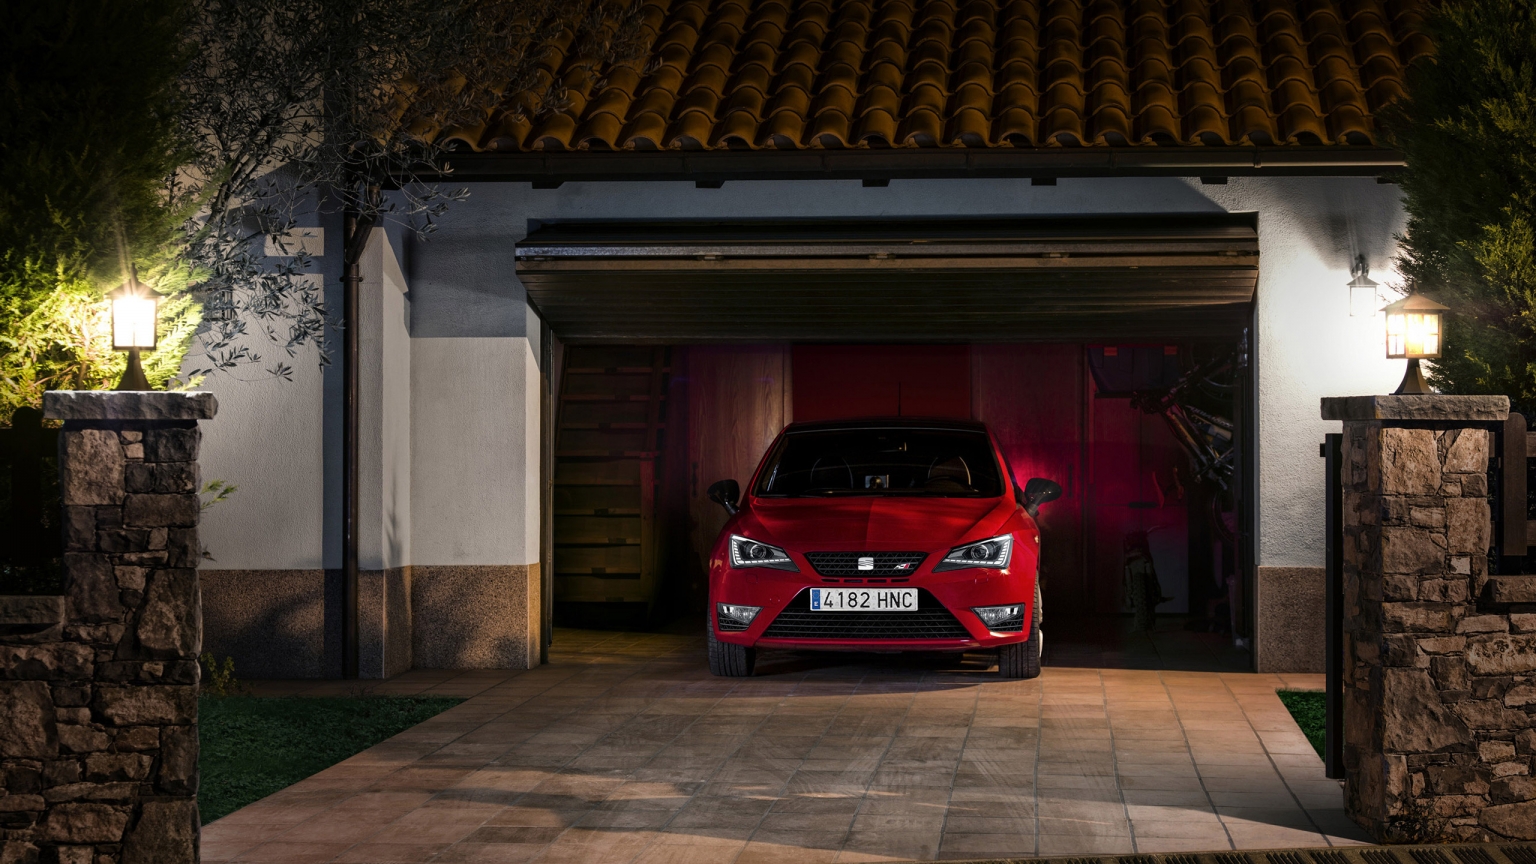 Red Seat Ibiza Cupra 2013 for 1536 x 864 HDTV resolution